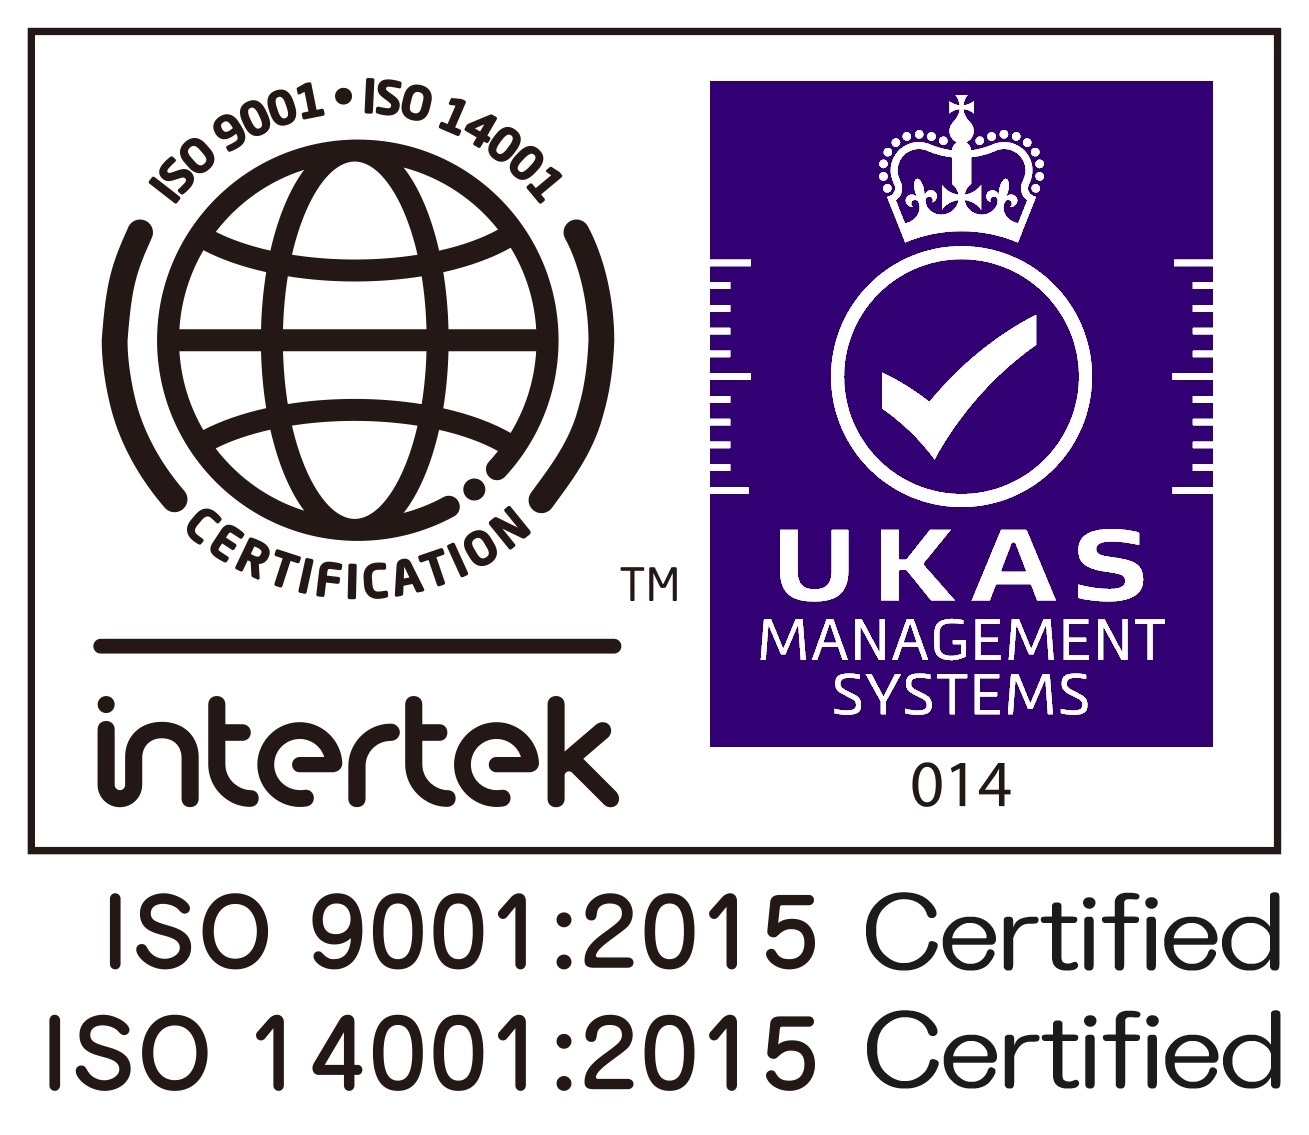 ISO9001、ISO14001